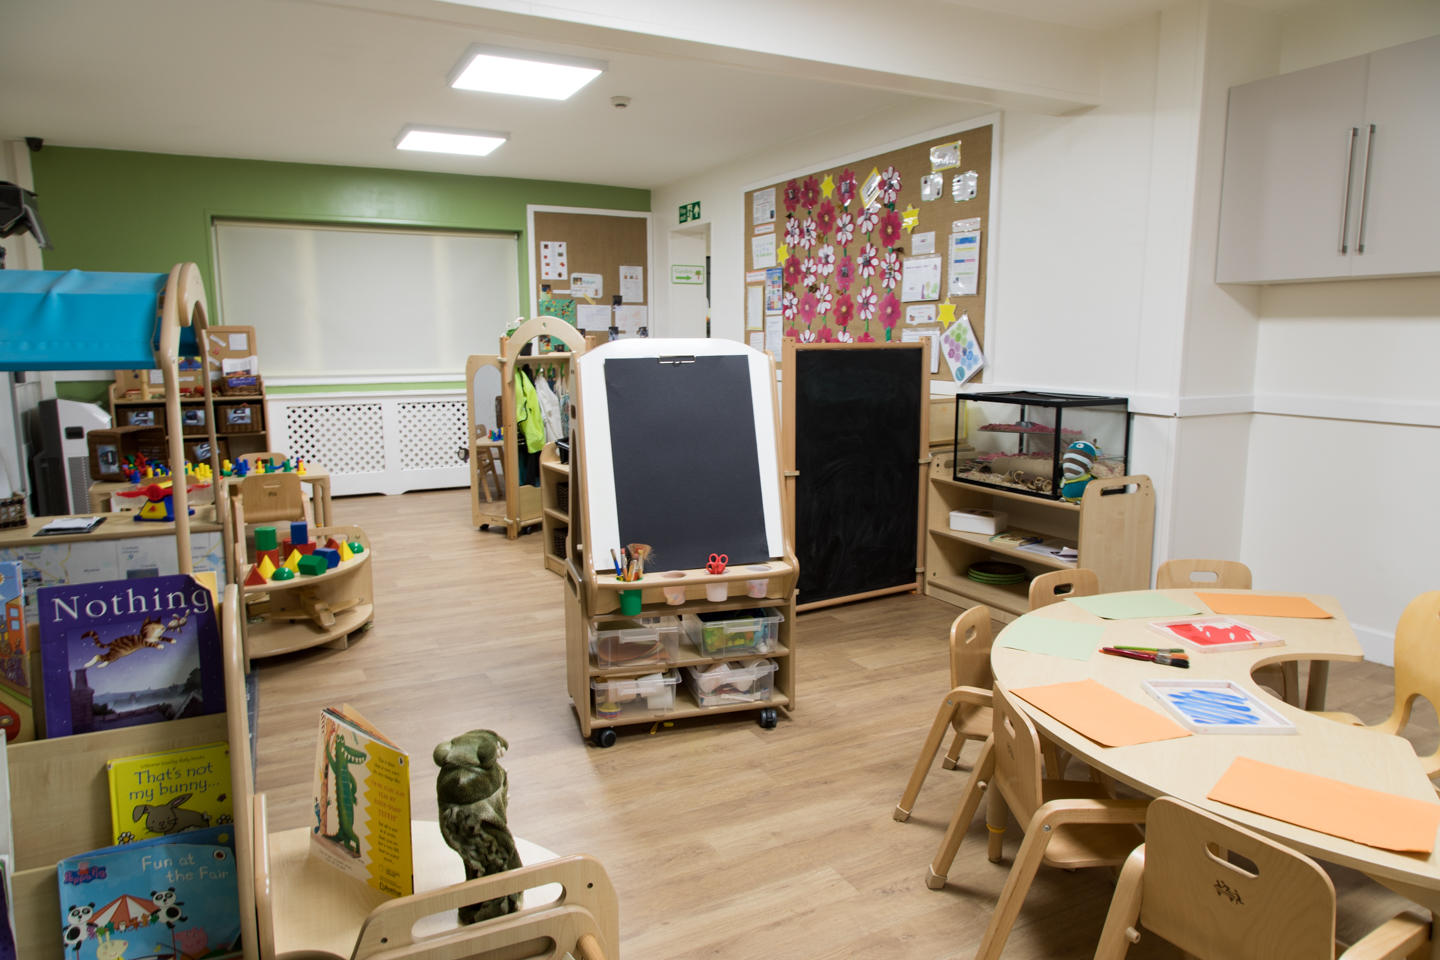 Bright Horizons Wavendon Day Nursery and Preschool Milton Keynes 01908 049036